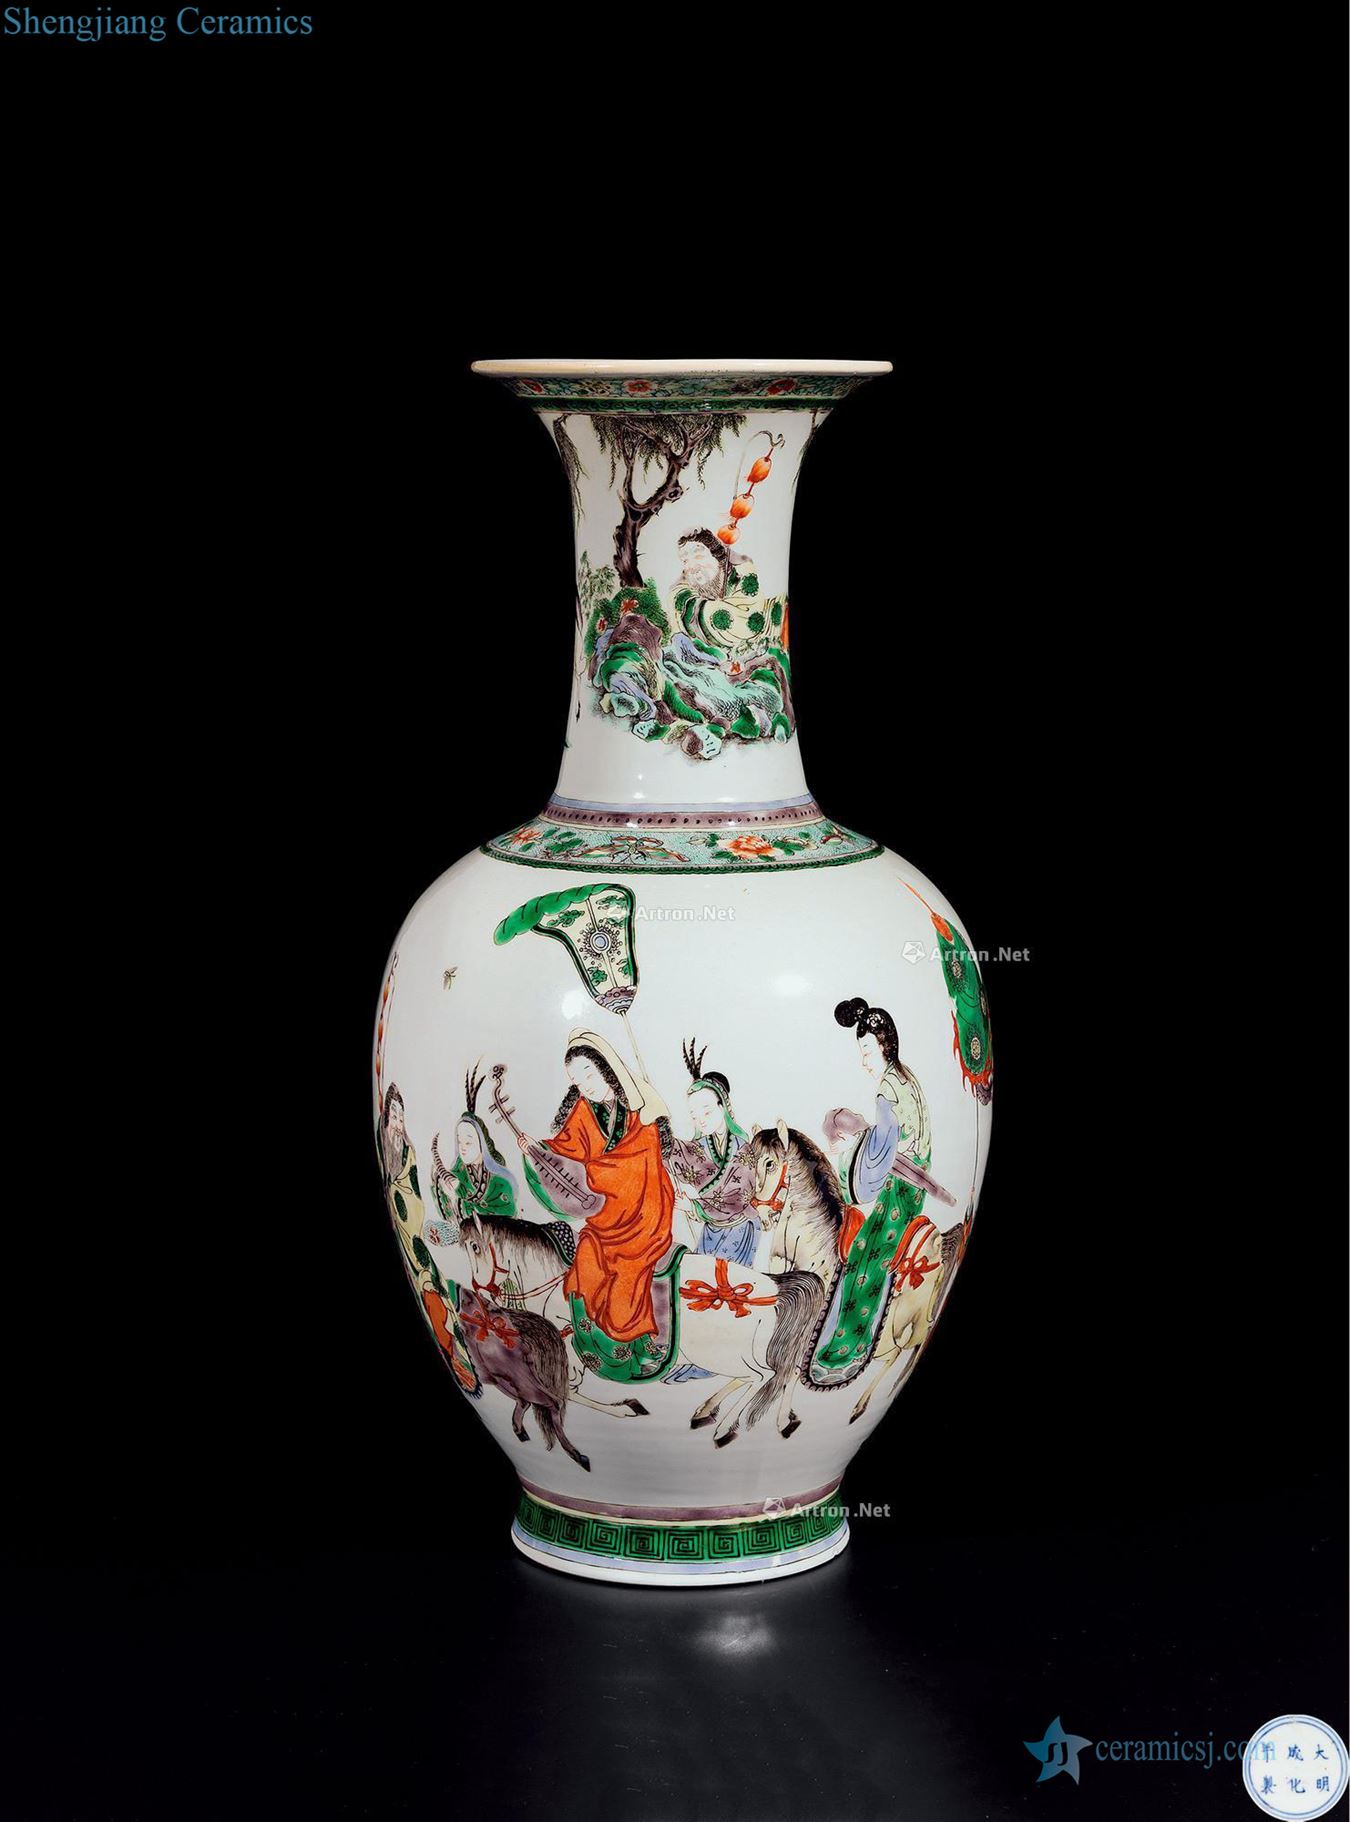 Qing stories of colorful figure radish bottle